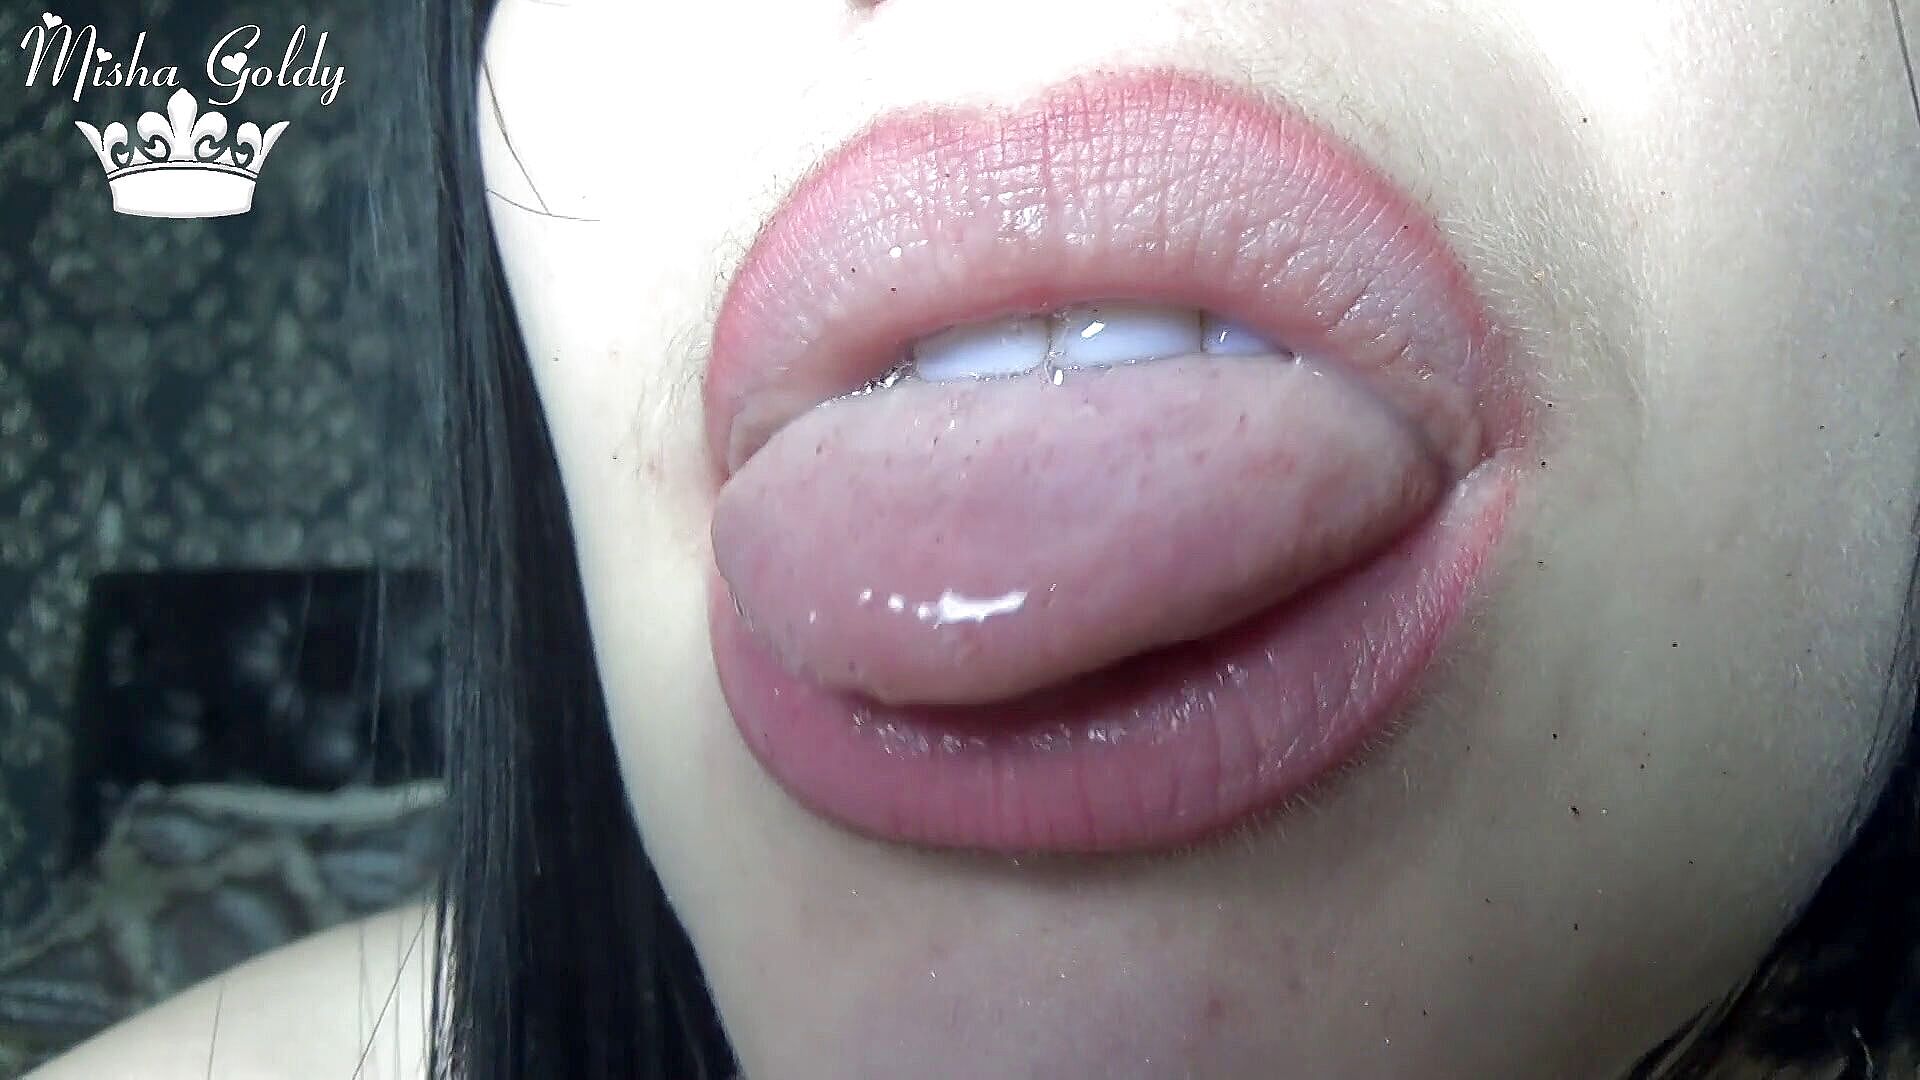 Tongue & spit & lips.